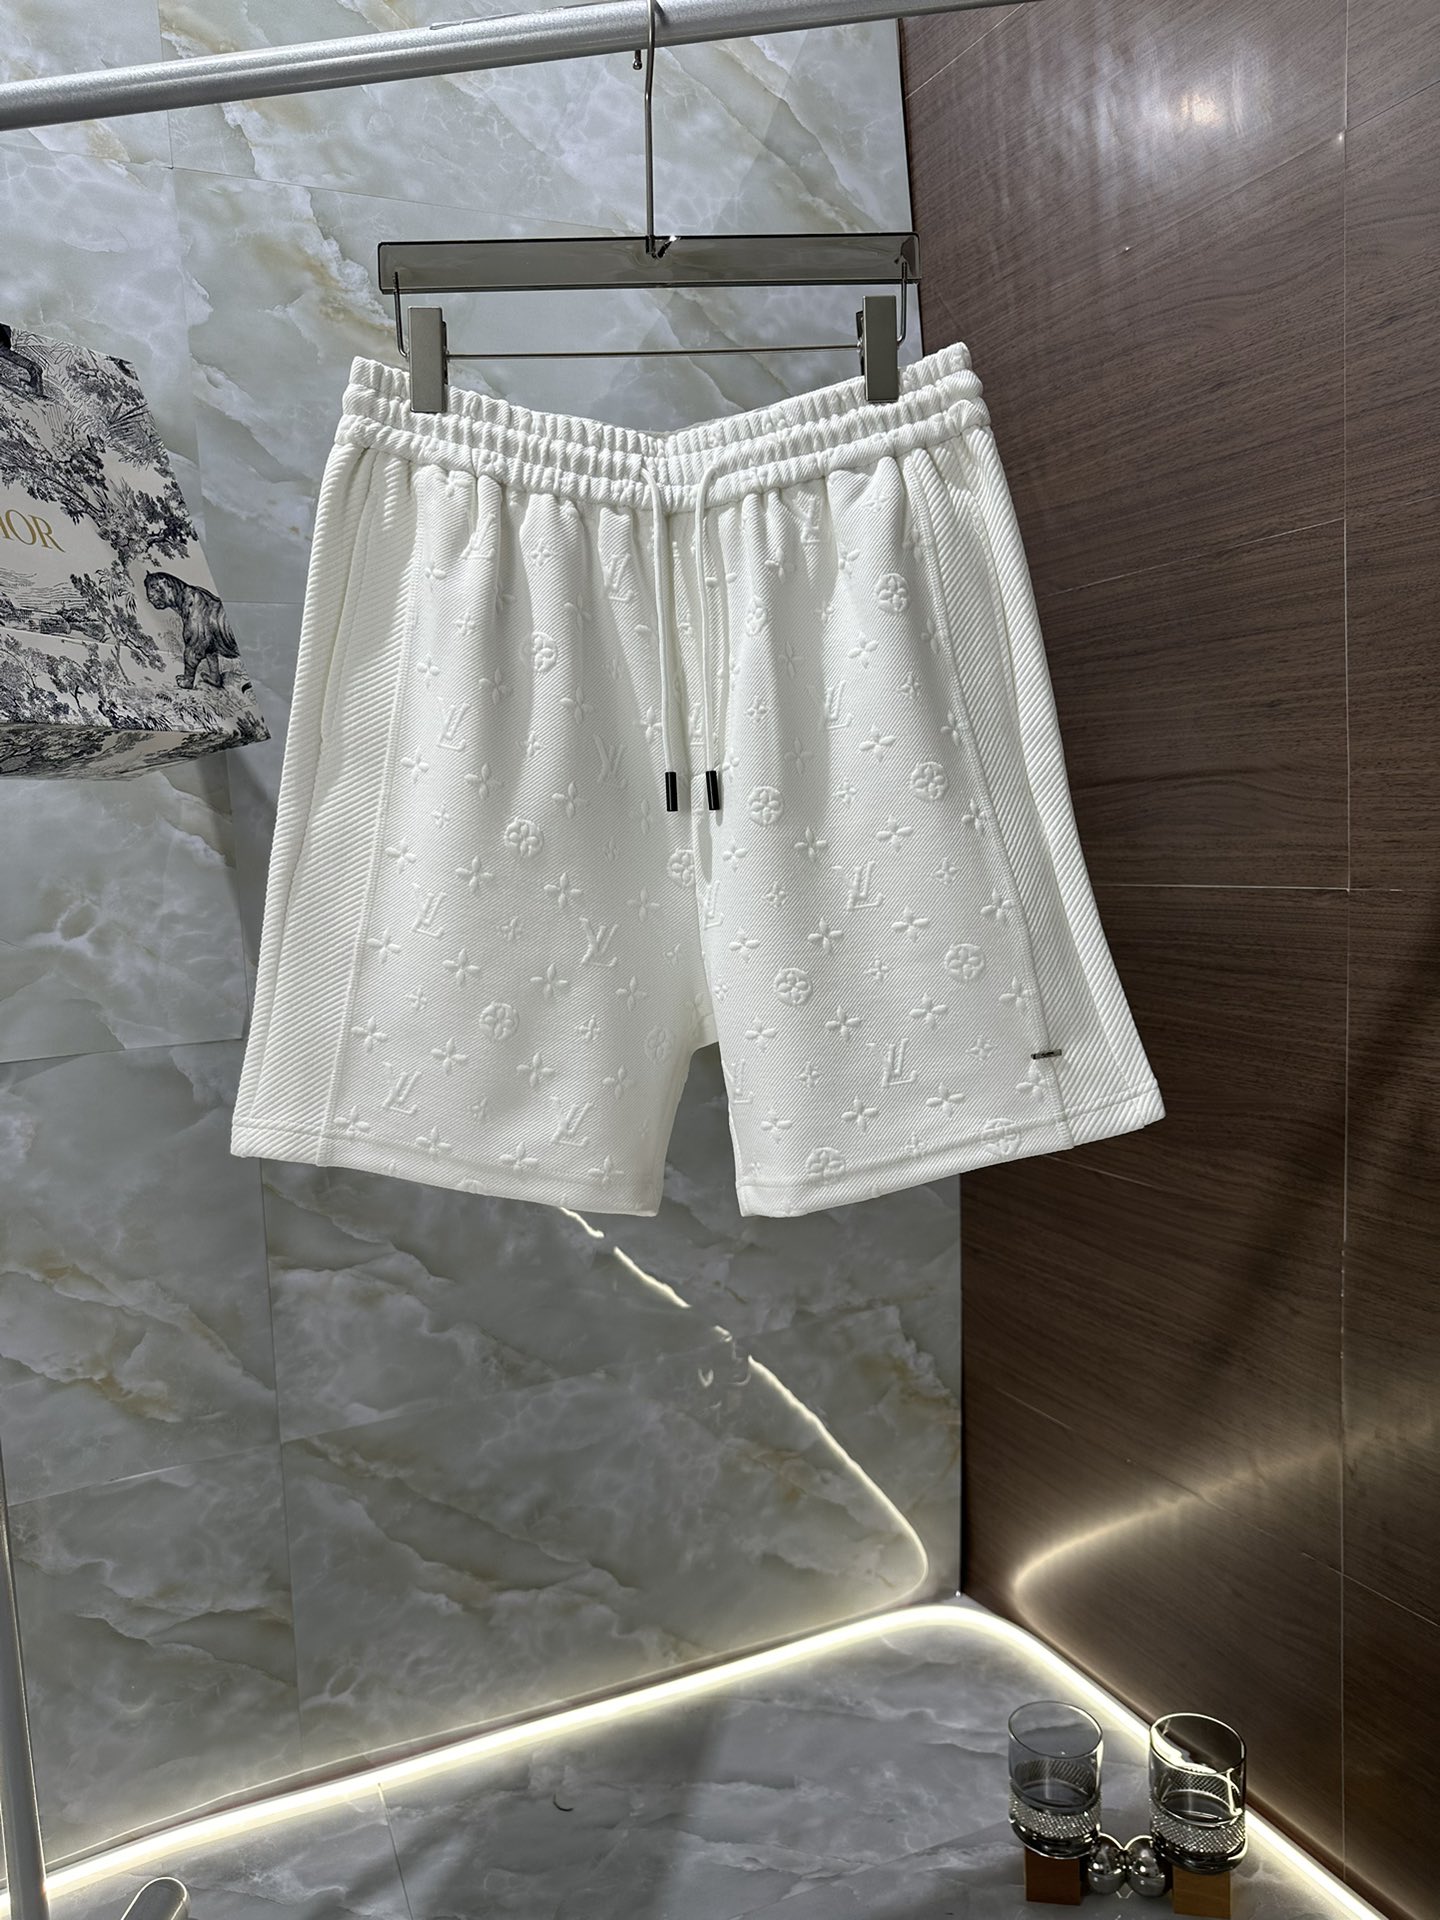 Louis Vuitton Clothing Shorts Black White Men Cotton Summer Collection Casual